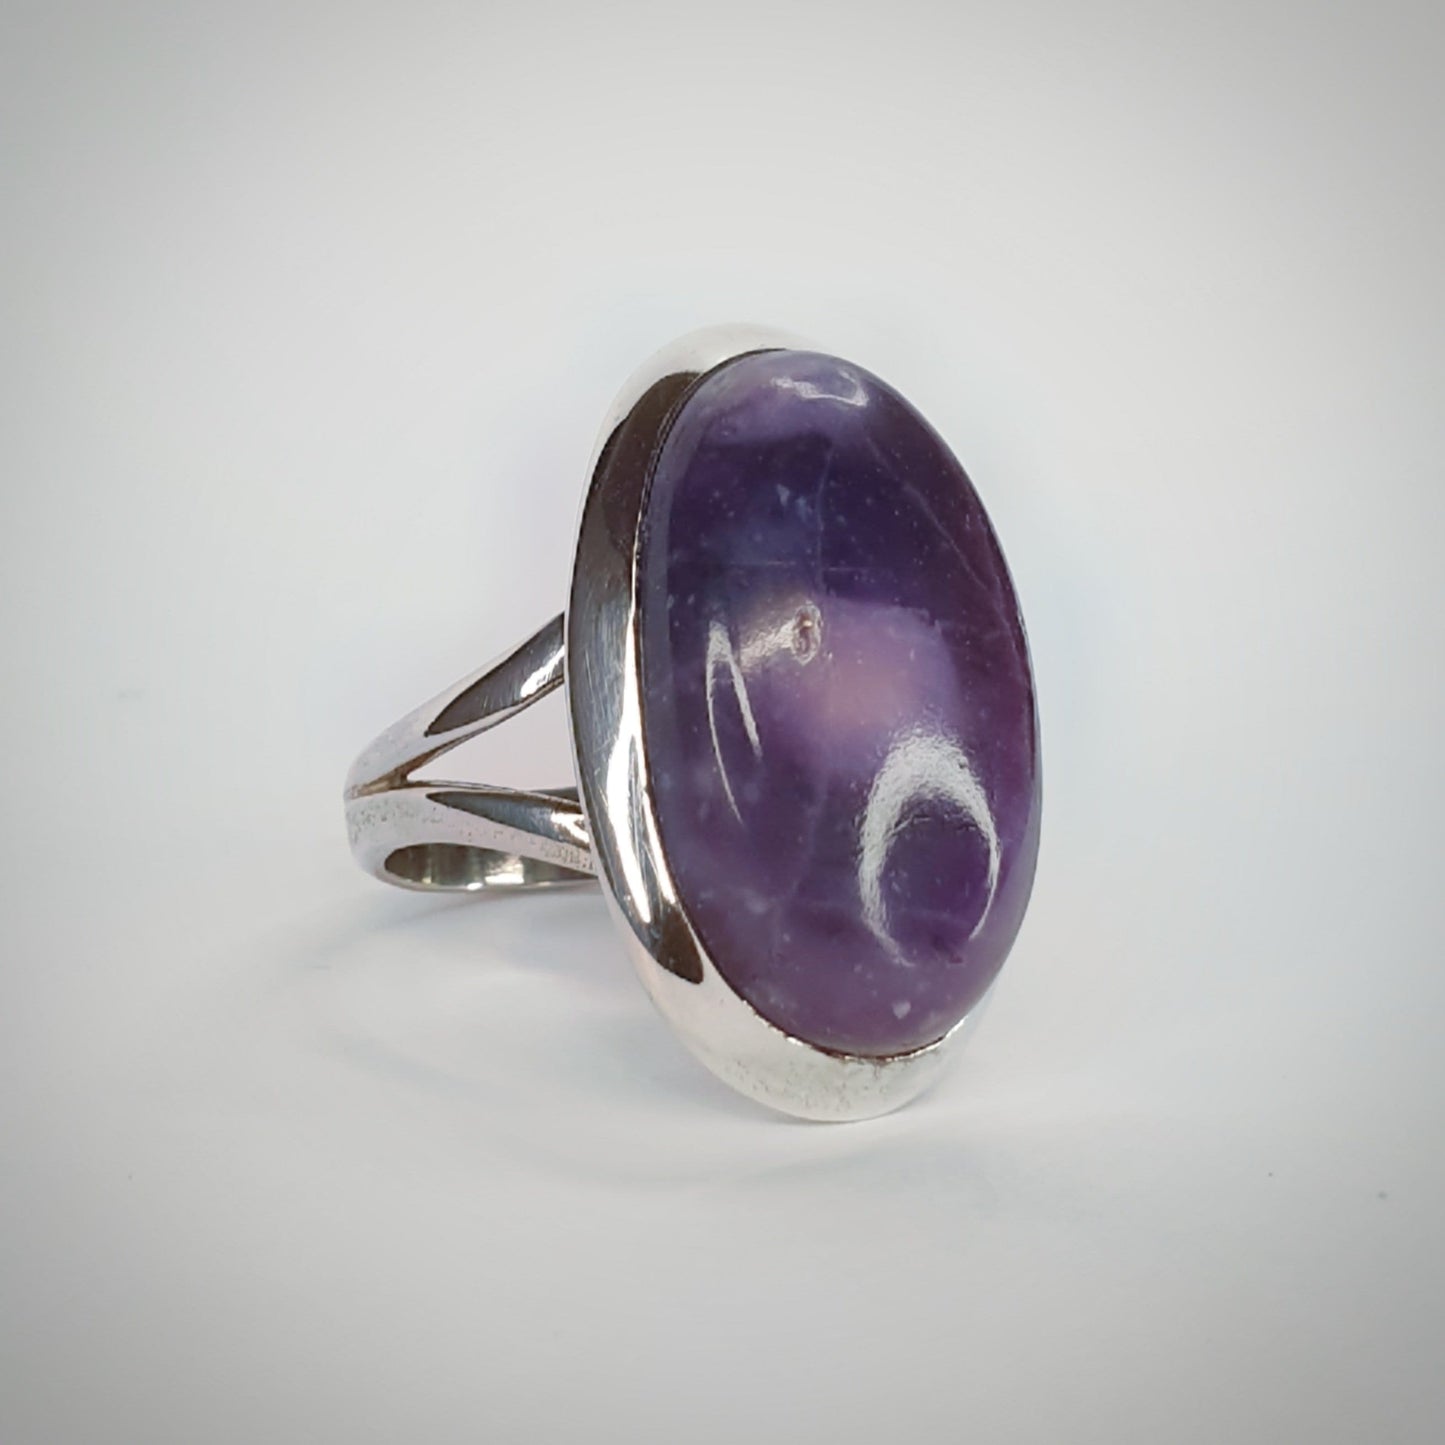 Tiffany Stone Ring - Size 6 - ON SALE